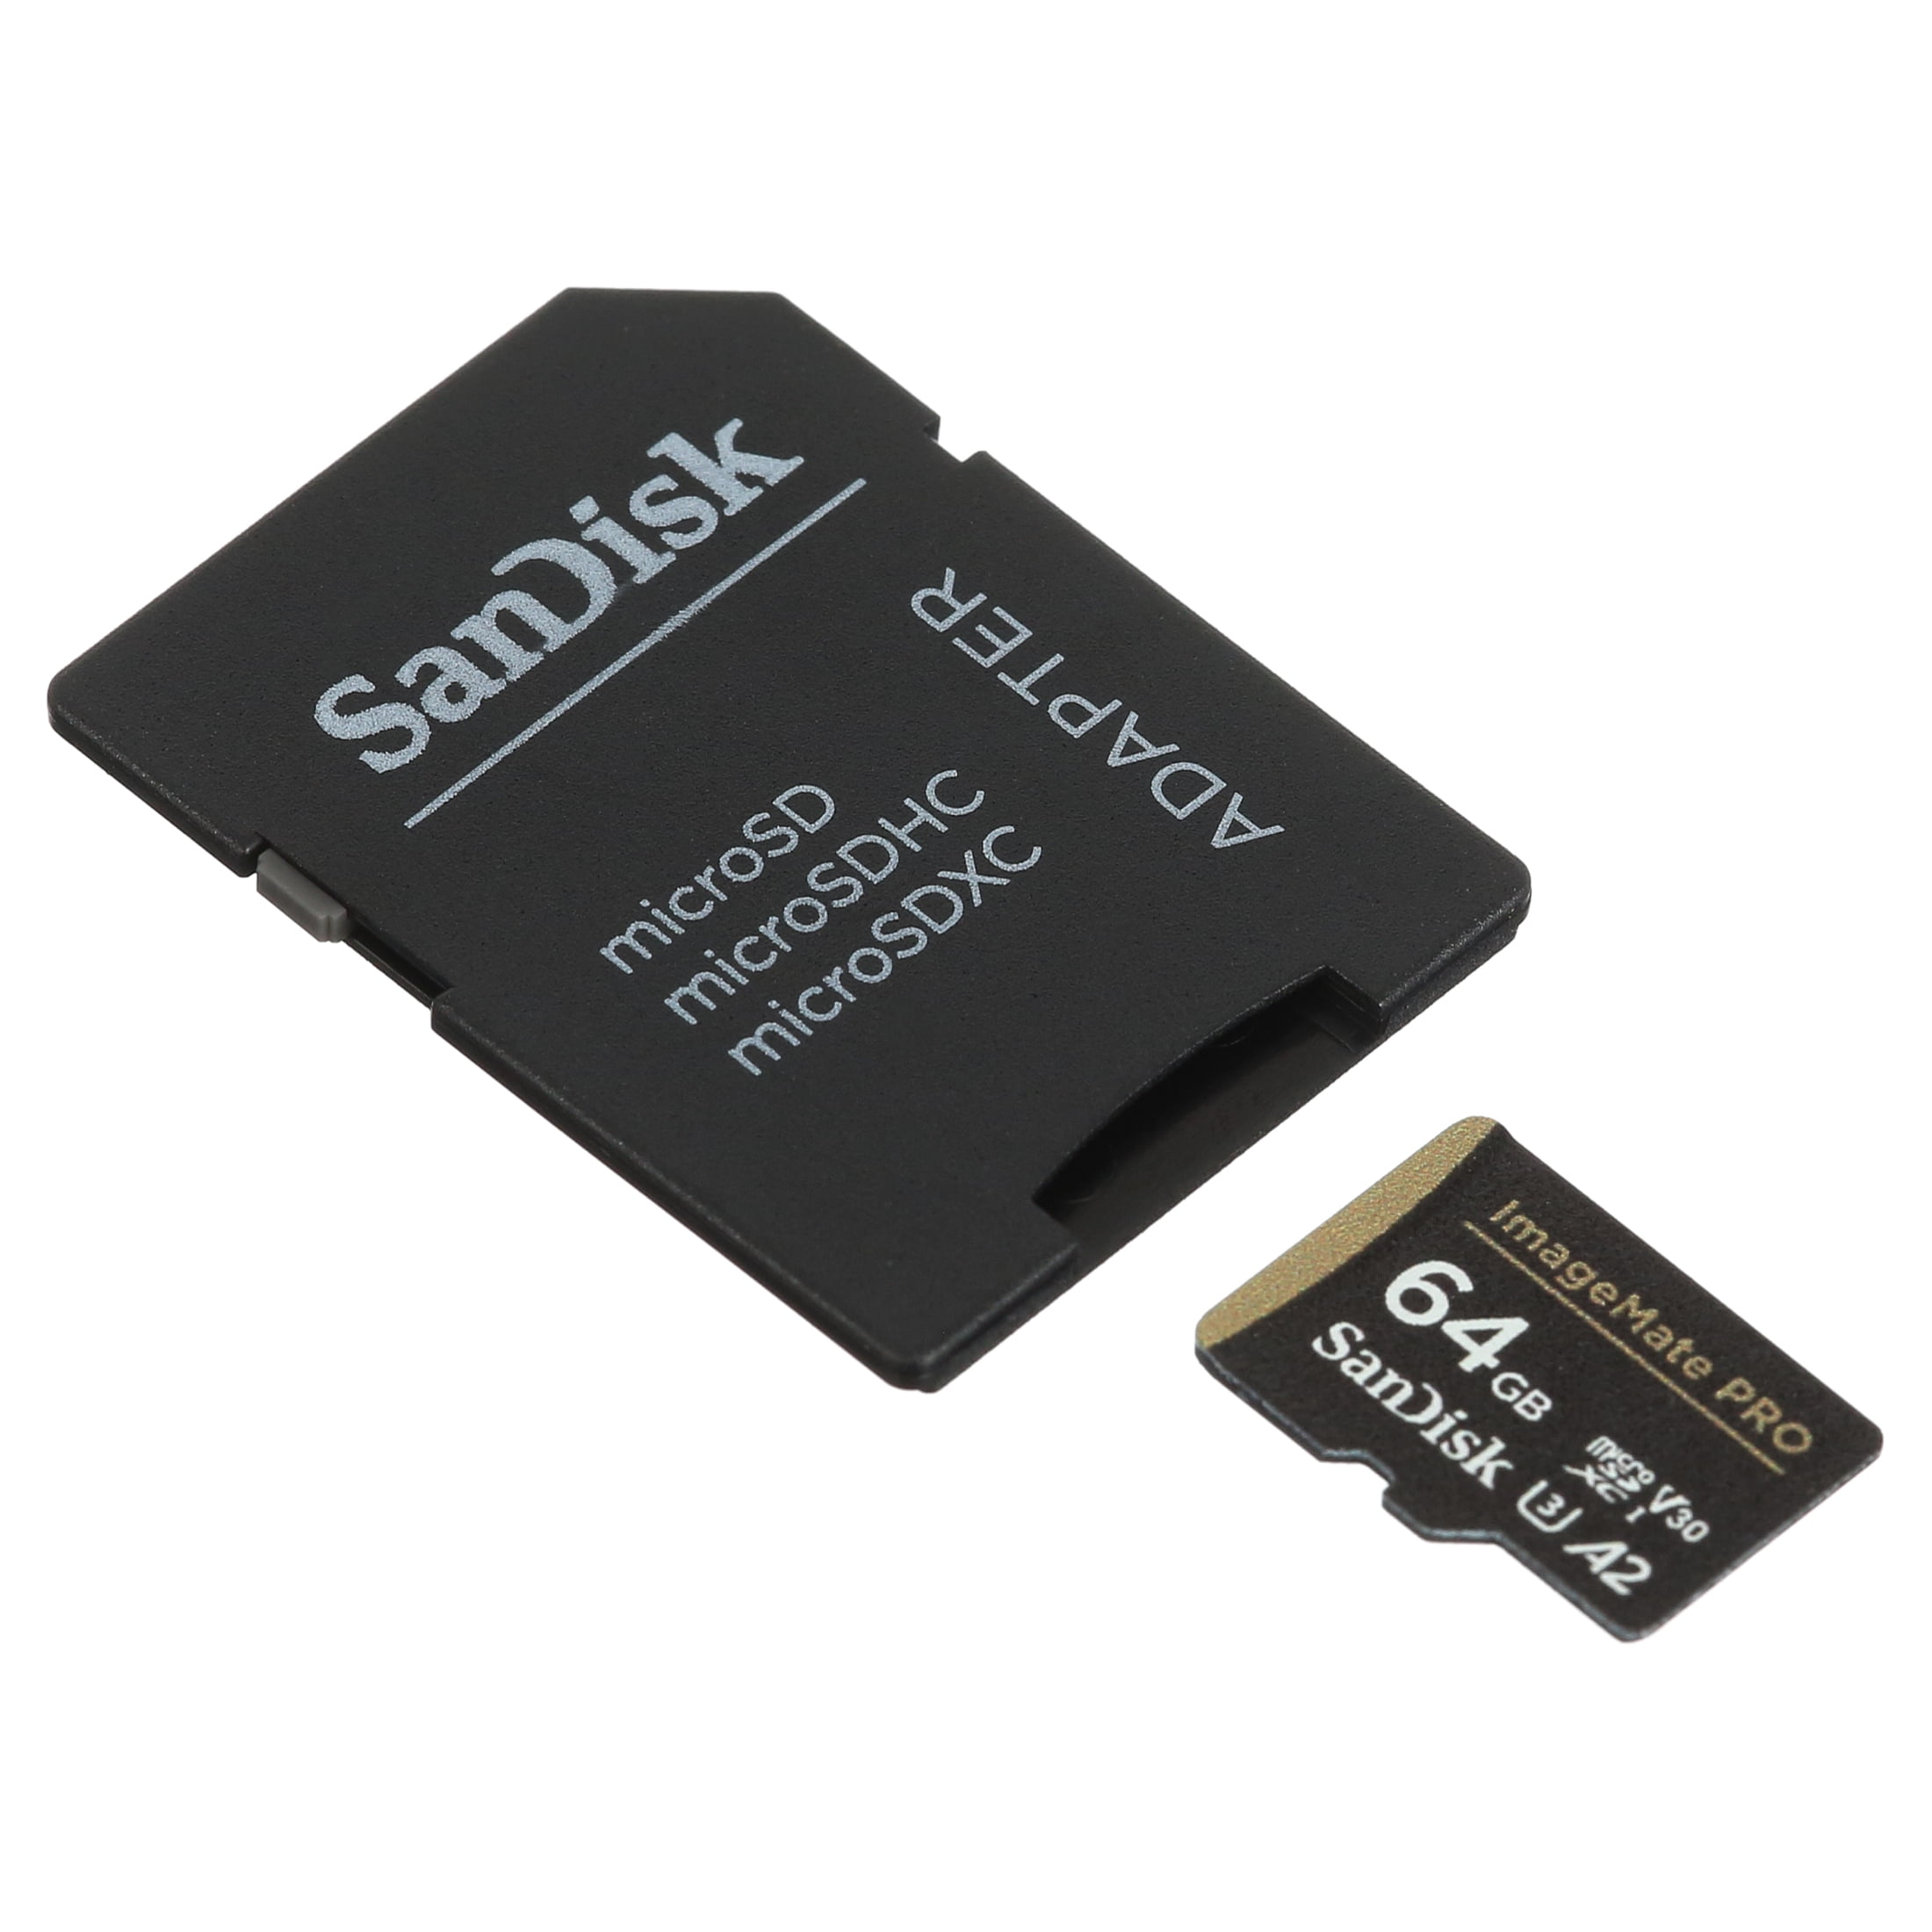 SanDisk Carte SD 1Go (Lot de 3Pcs) - fecomponents